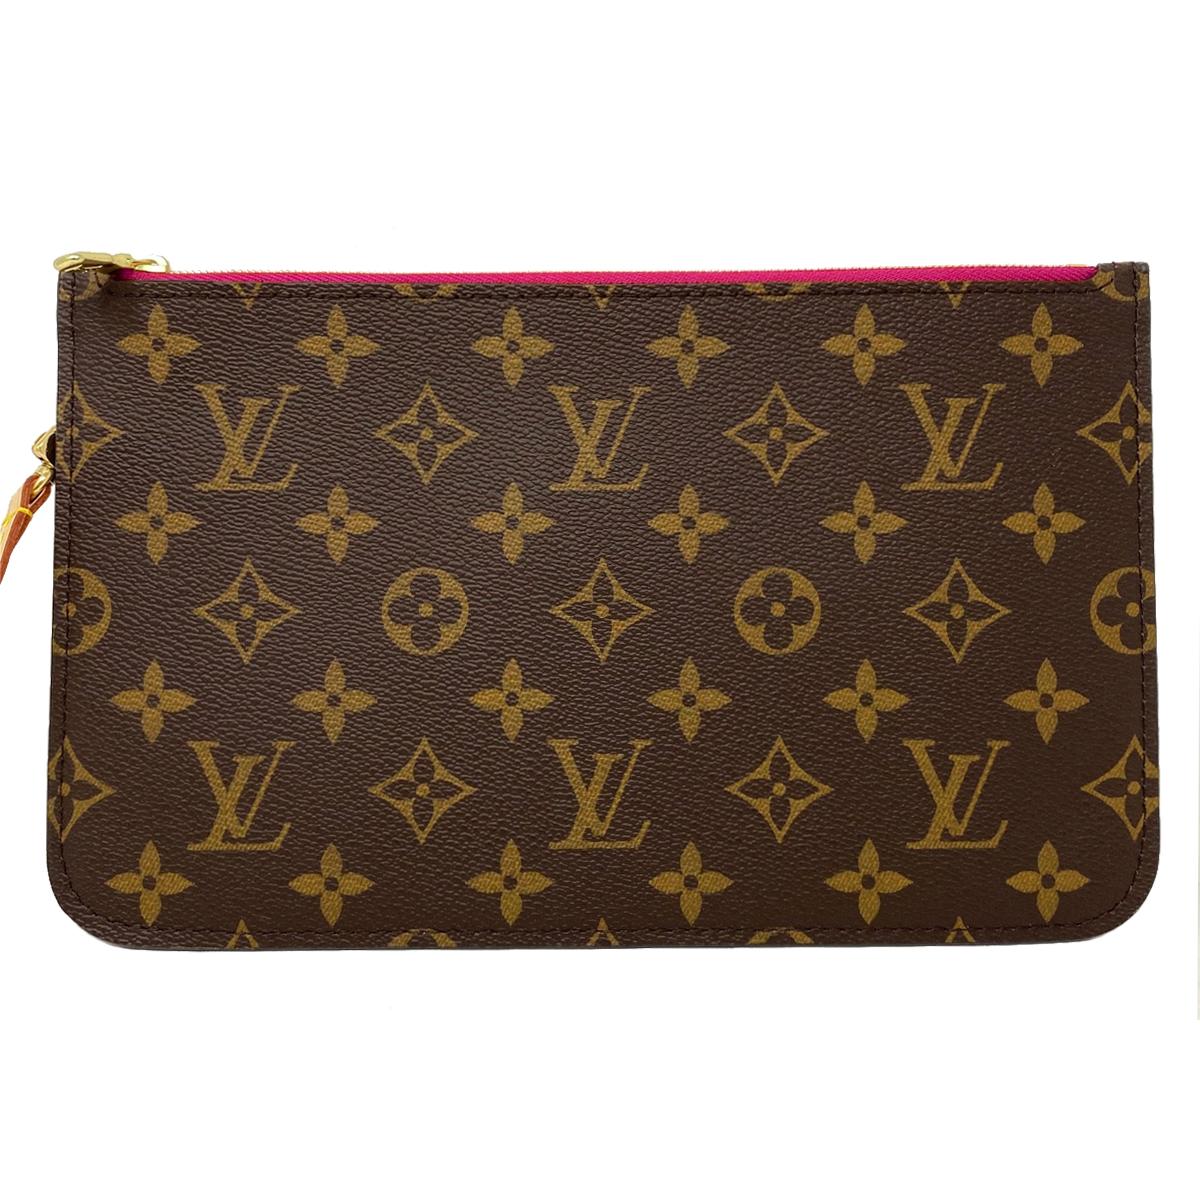 Louis Vuitton Neverfull MM Peony Monogram Leather Canvas Tote Handbag  1